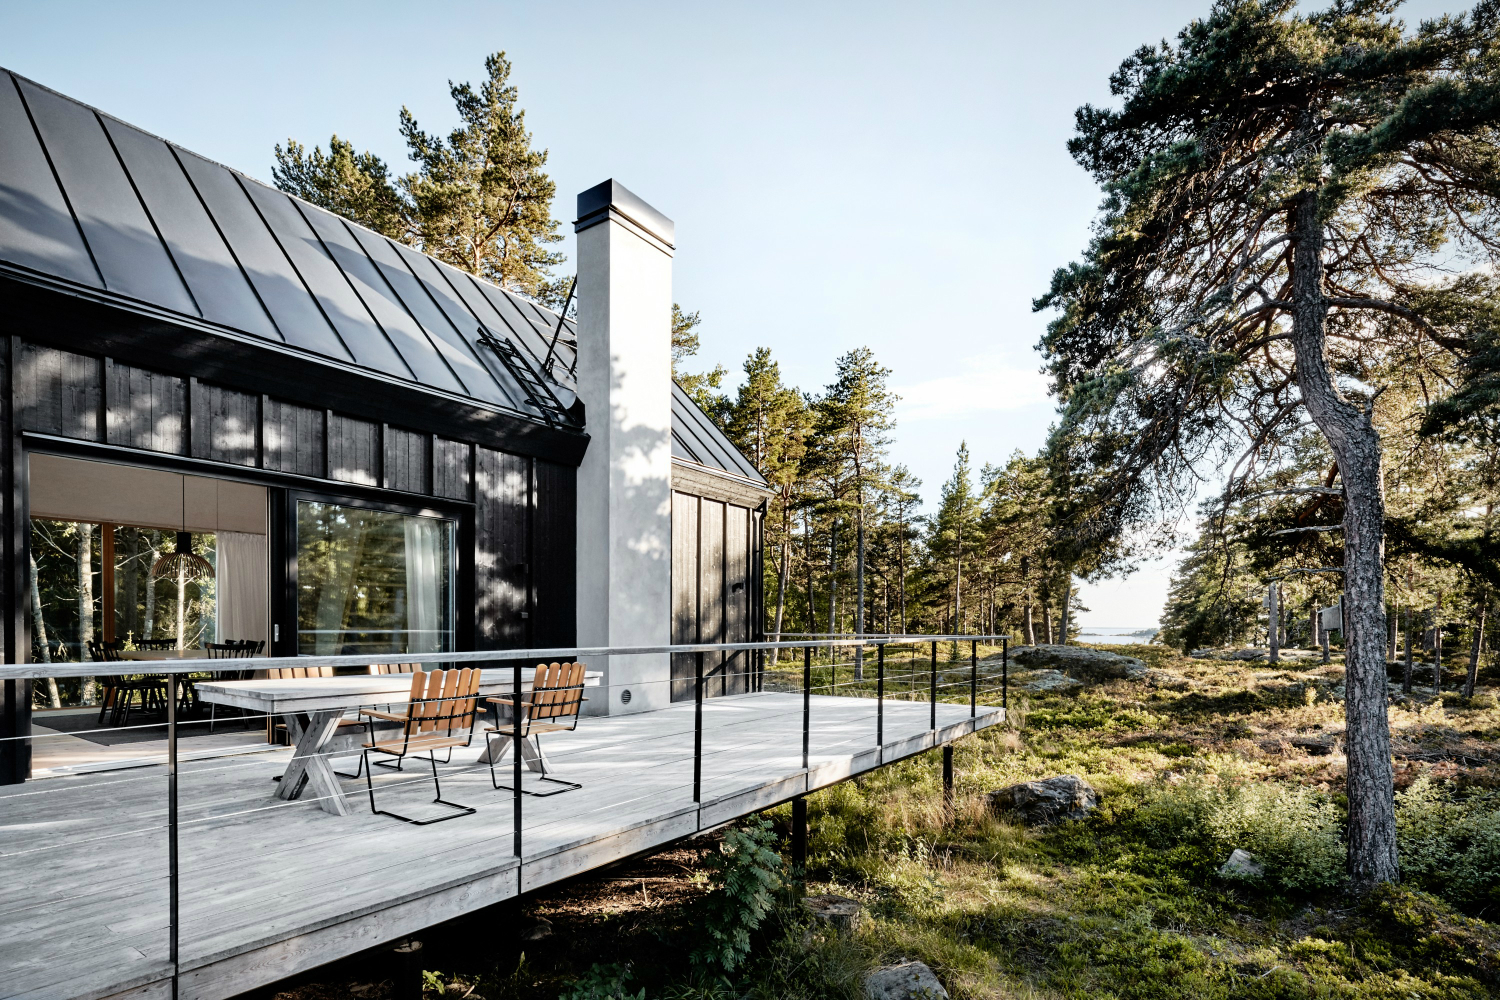 archipelago sommarhus swedish cabin kod arkitekter summerhouse 10